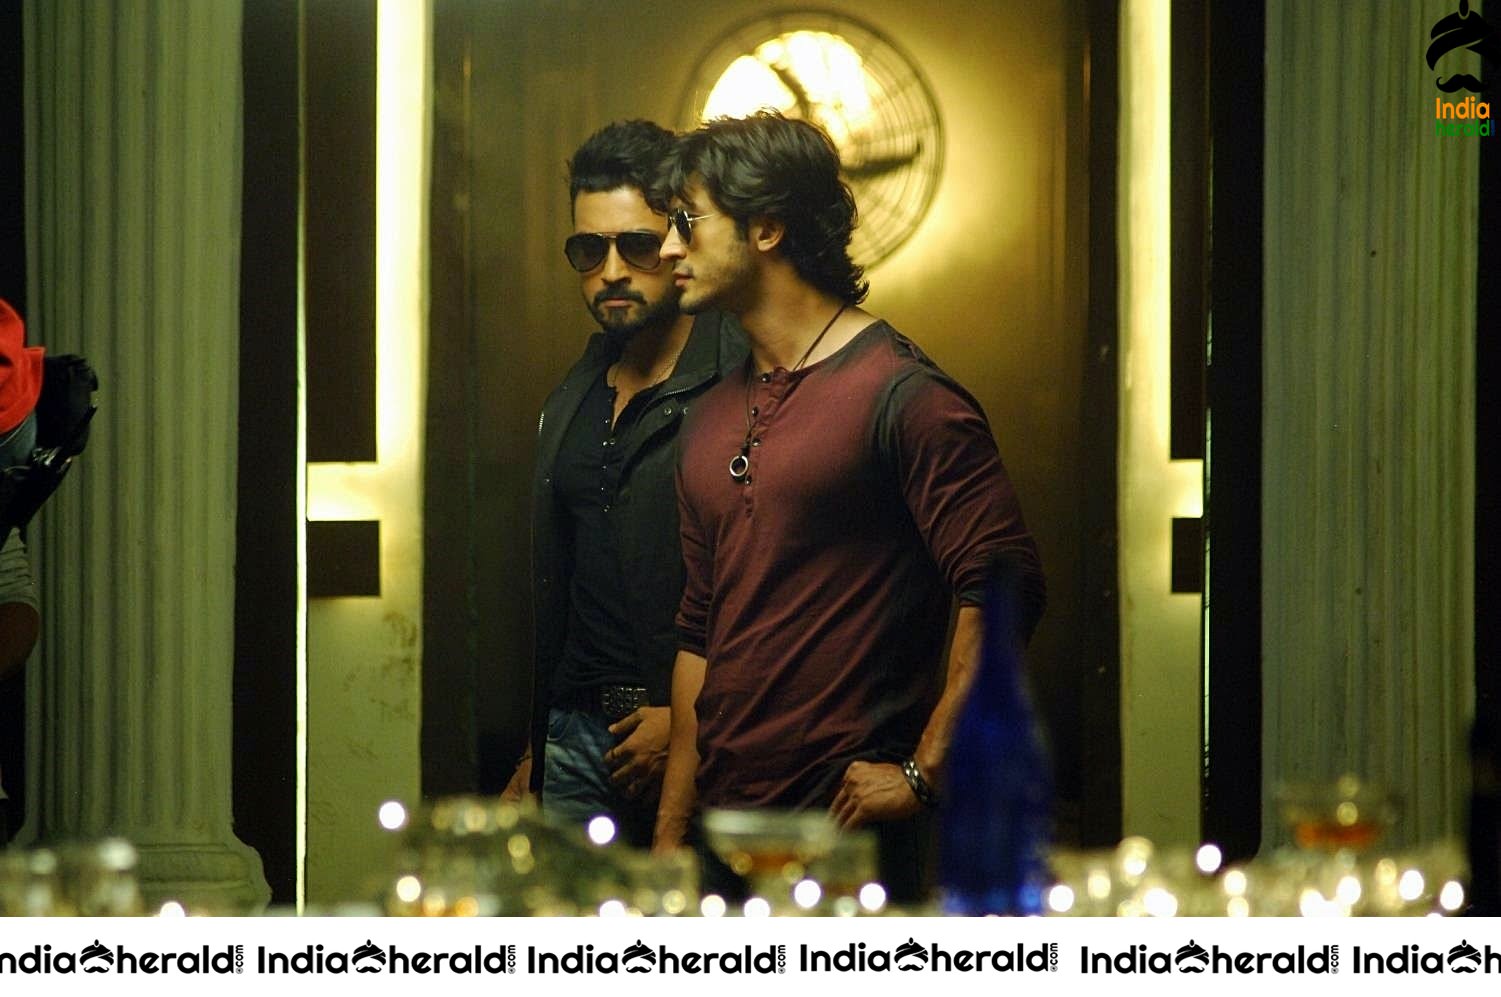 INDIA HERALD EXCLUSIVE Hot Samantha and Surya Unseen Stills from Sikindar Set 4